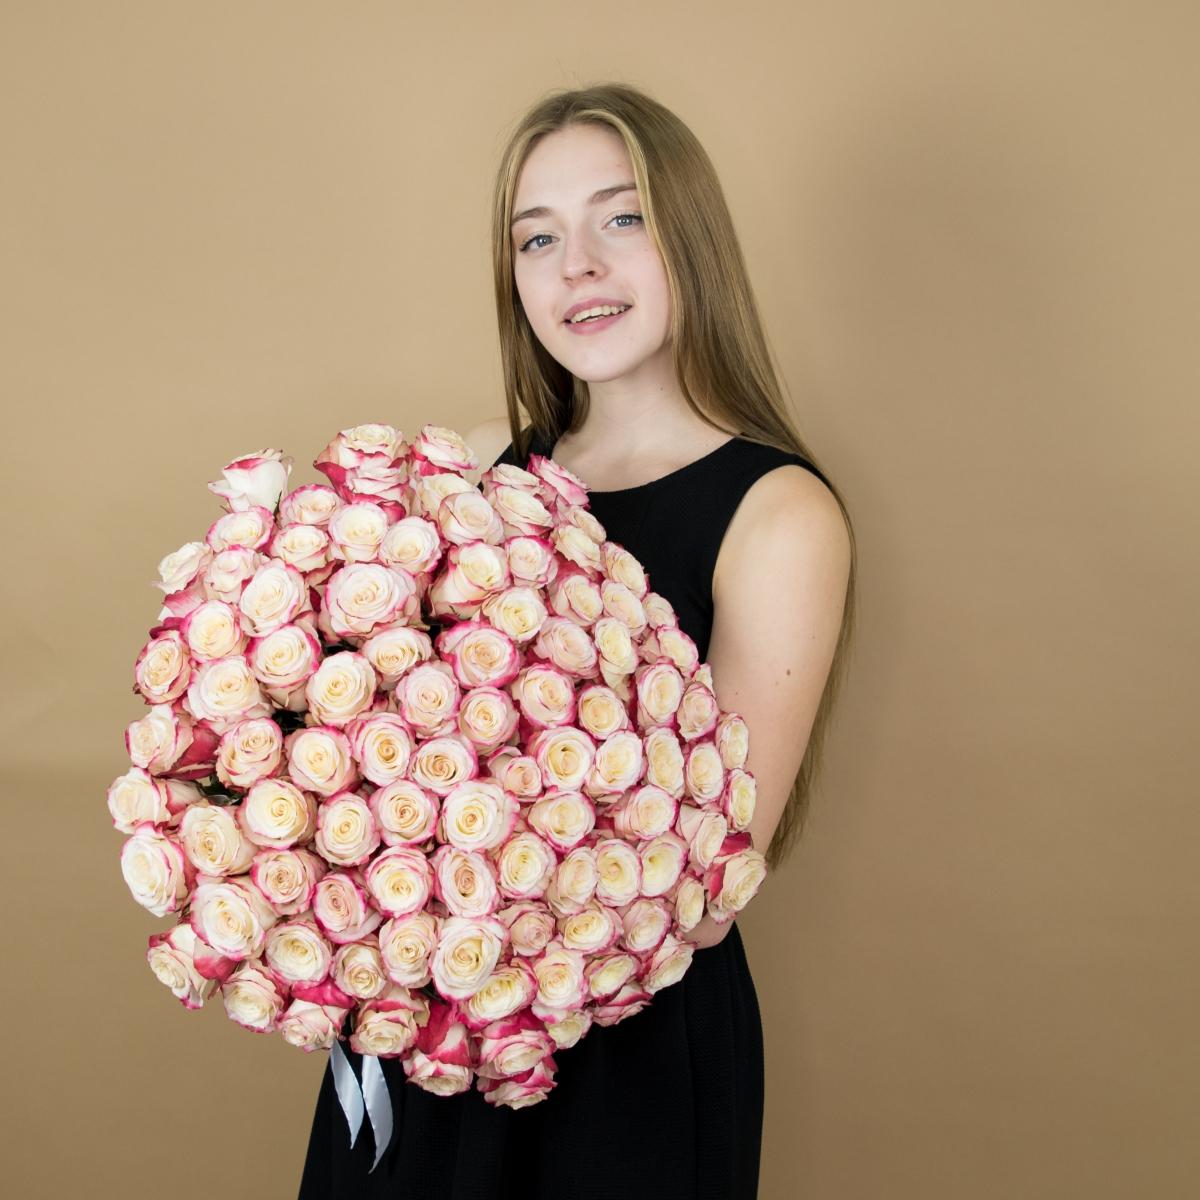 Розы красно-белые 101 шт. (40 см) артикул букета: 19224nvsb